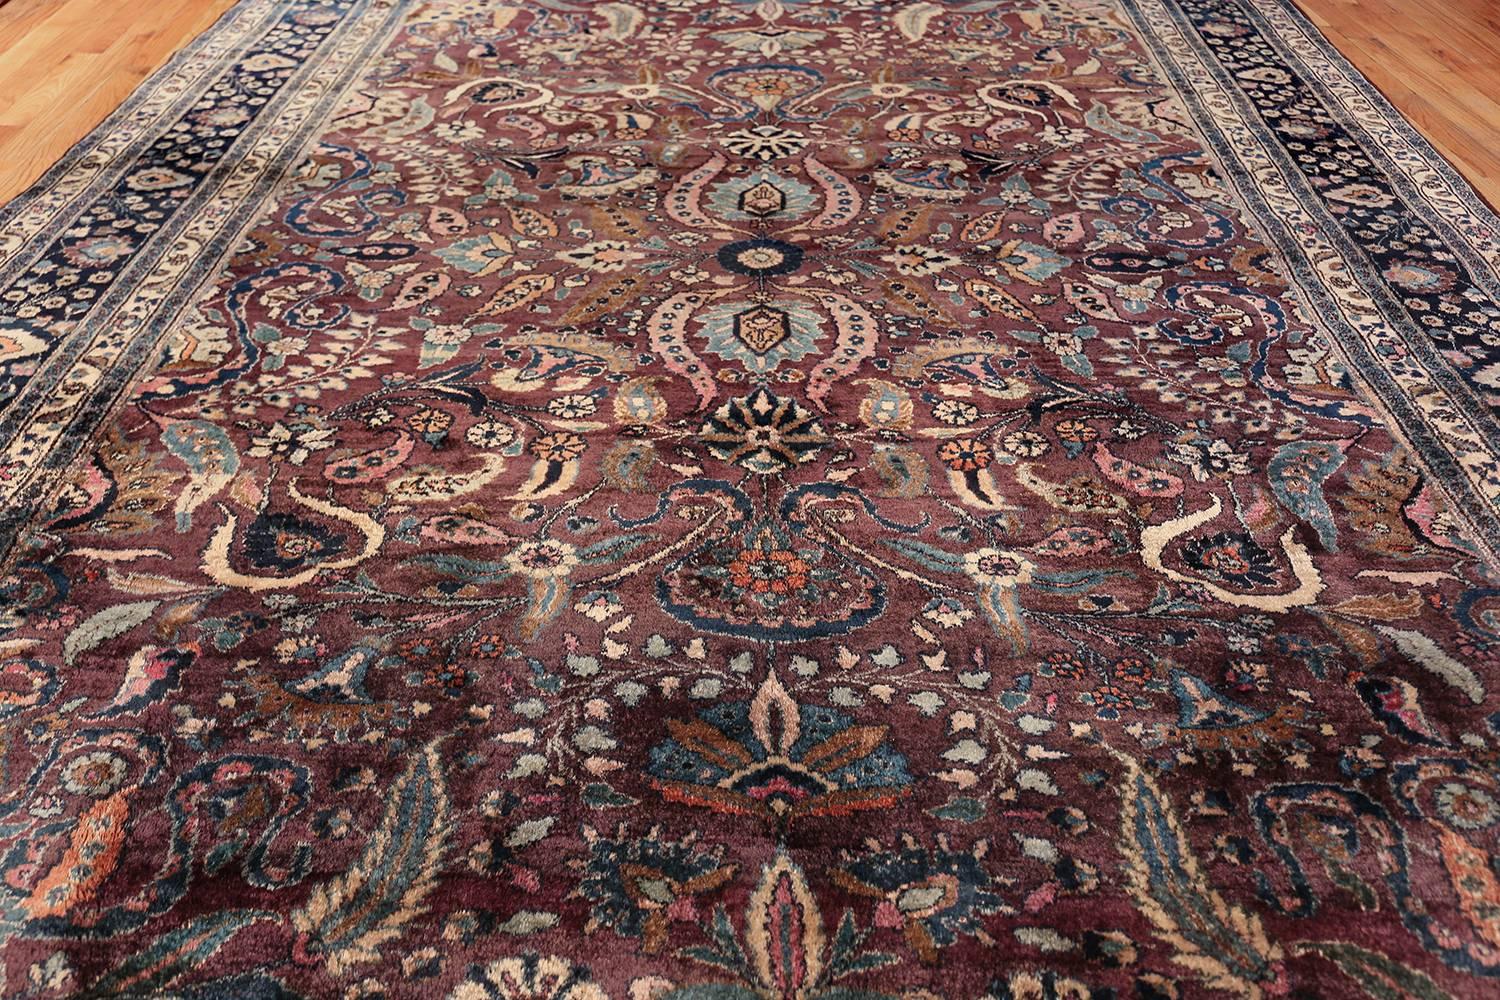 Antique Persian Khorassan Rug. Size: 10' x 14' 7